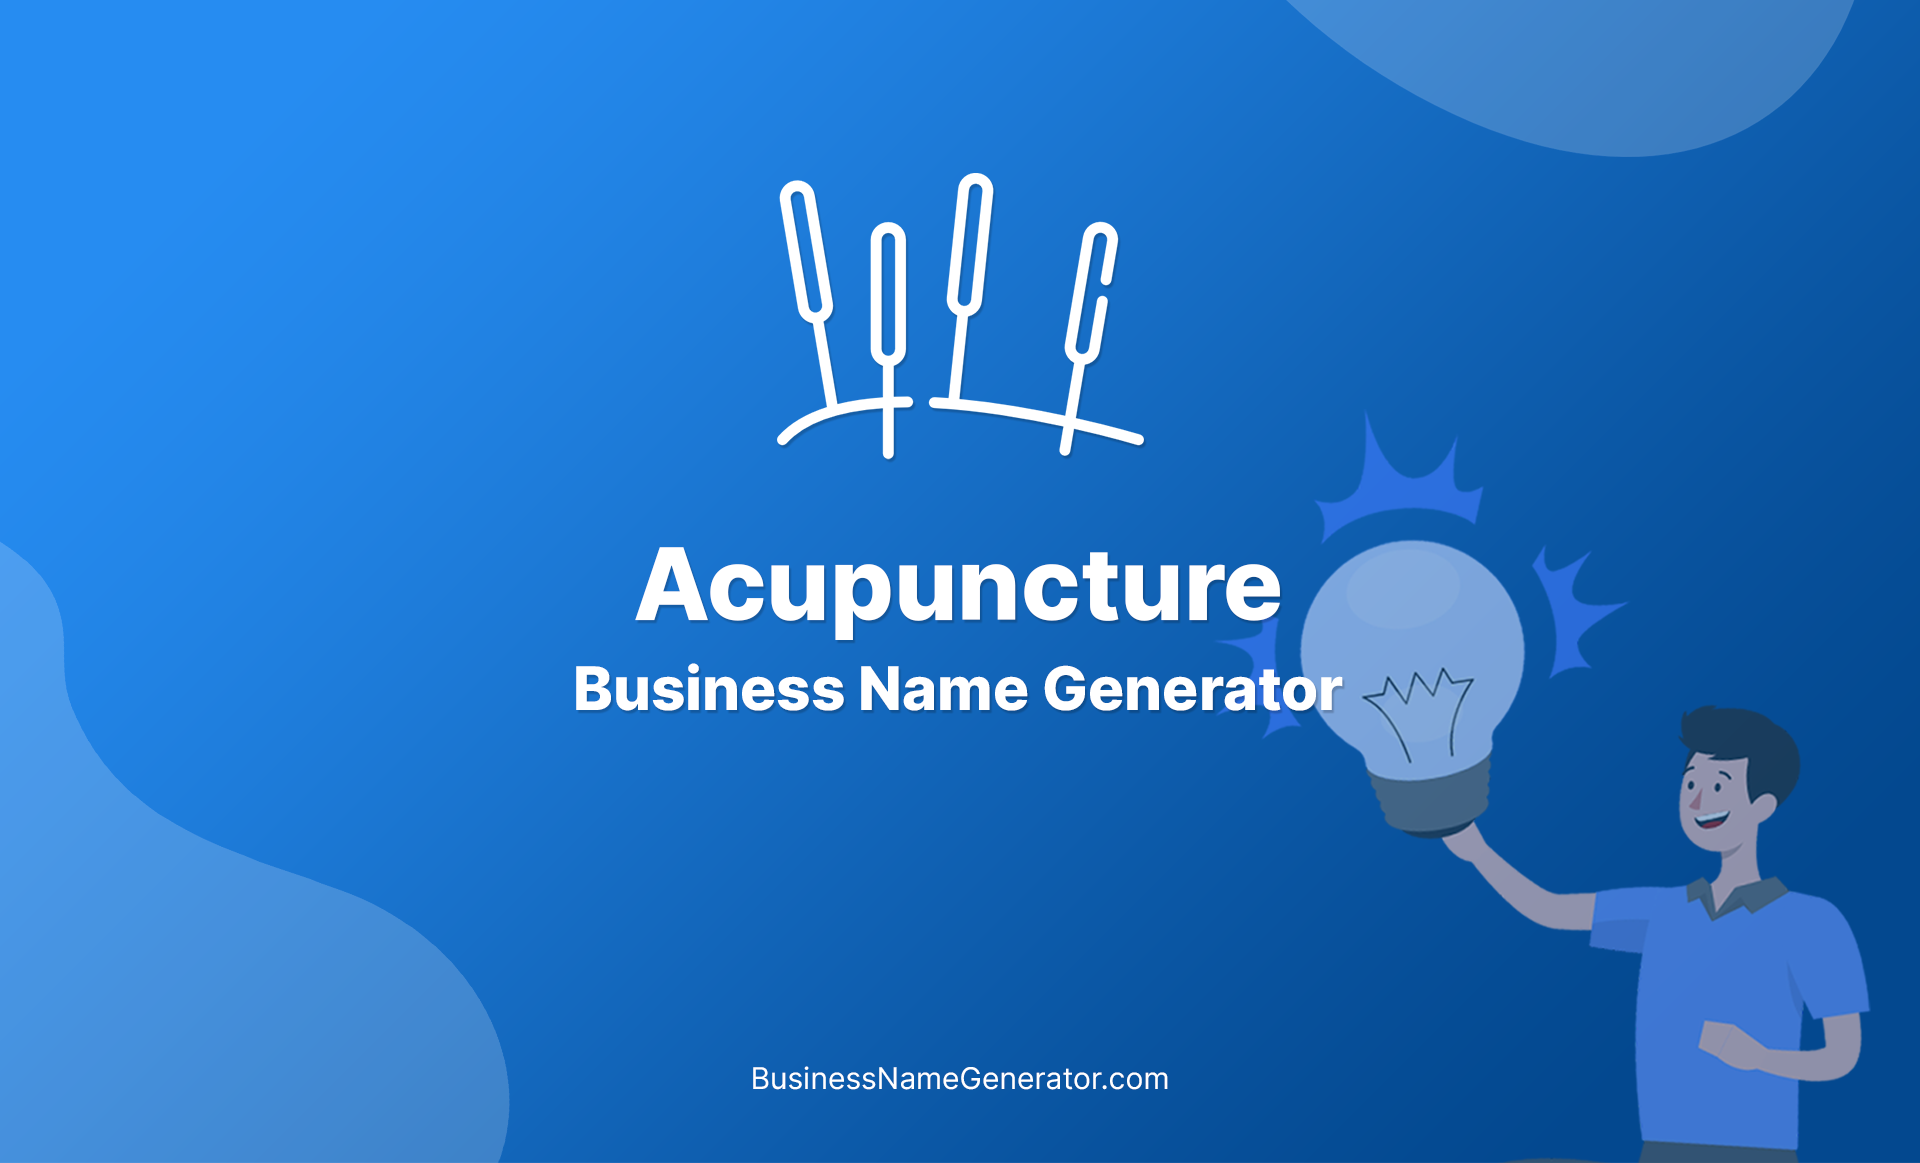 Acupuncture Business Name Generator